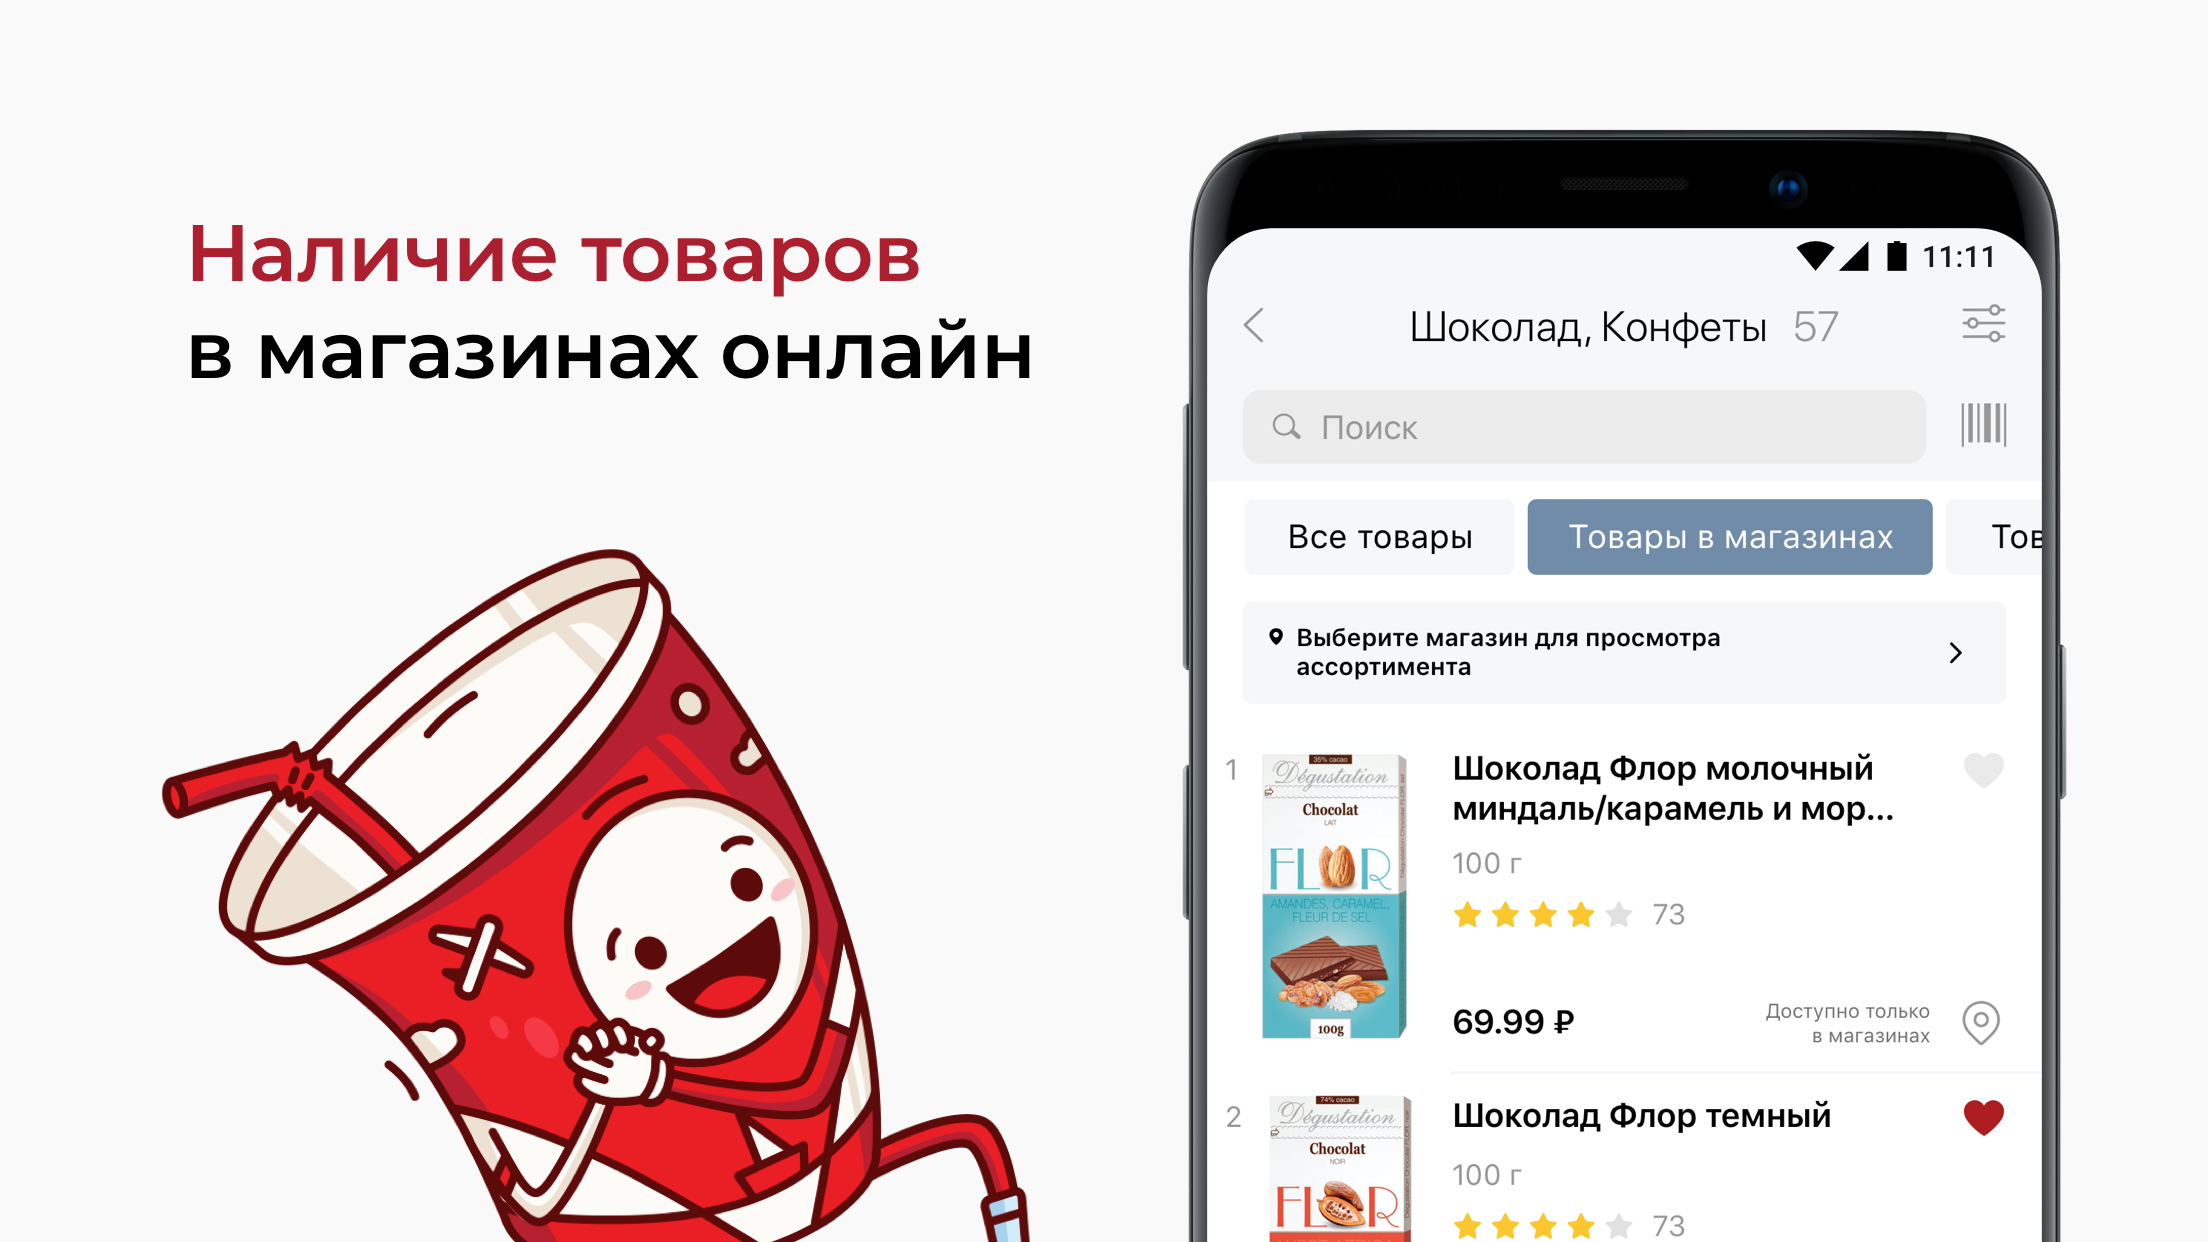 Android application Красное&Белое - скидки и акции screenshort